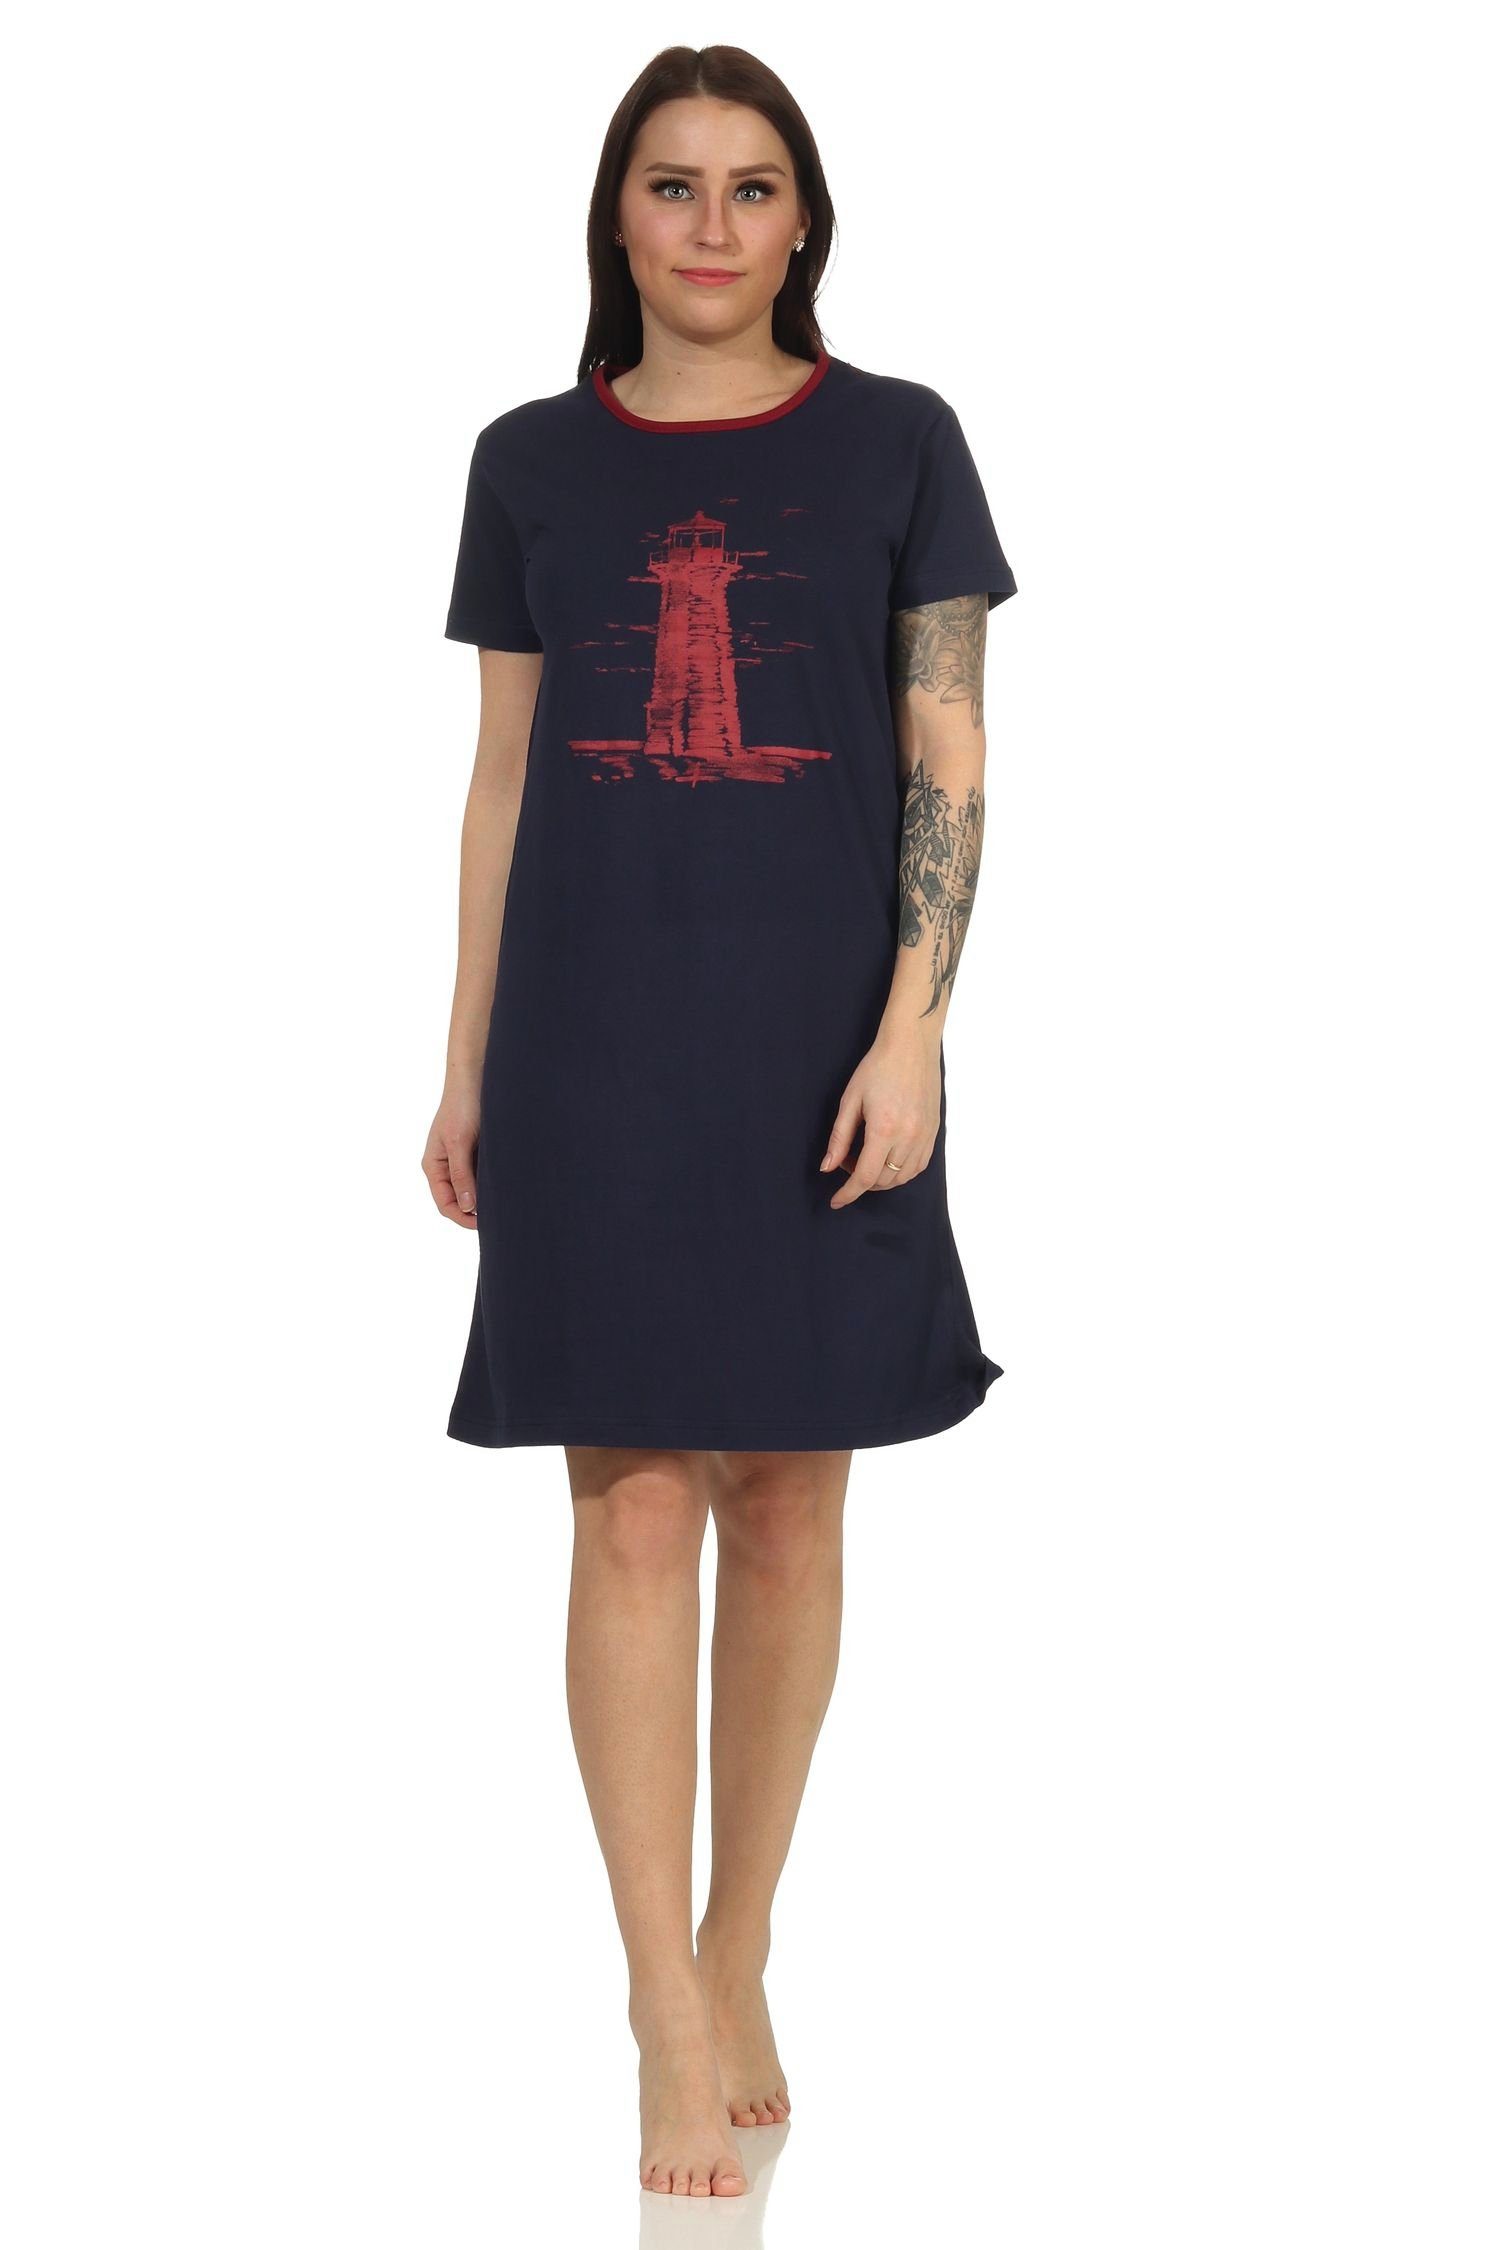 RELAX by Normann Nachthemd Damen Nachthemd kurzarm im maritimen Look und Leuchtturm als Motiv navy